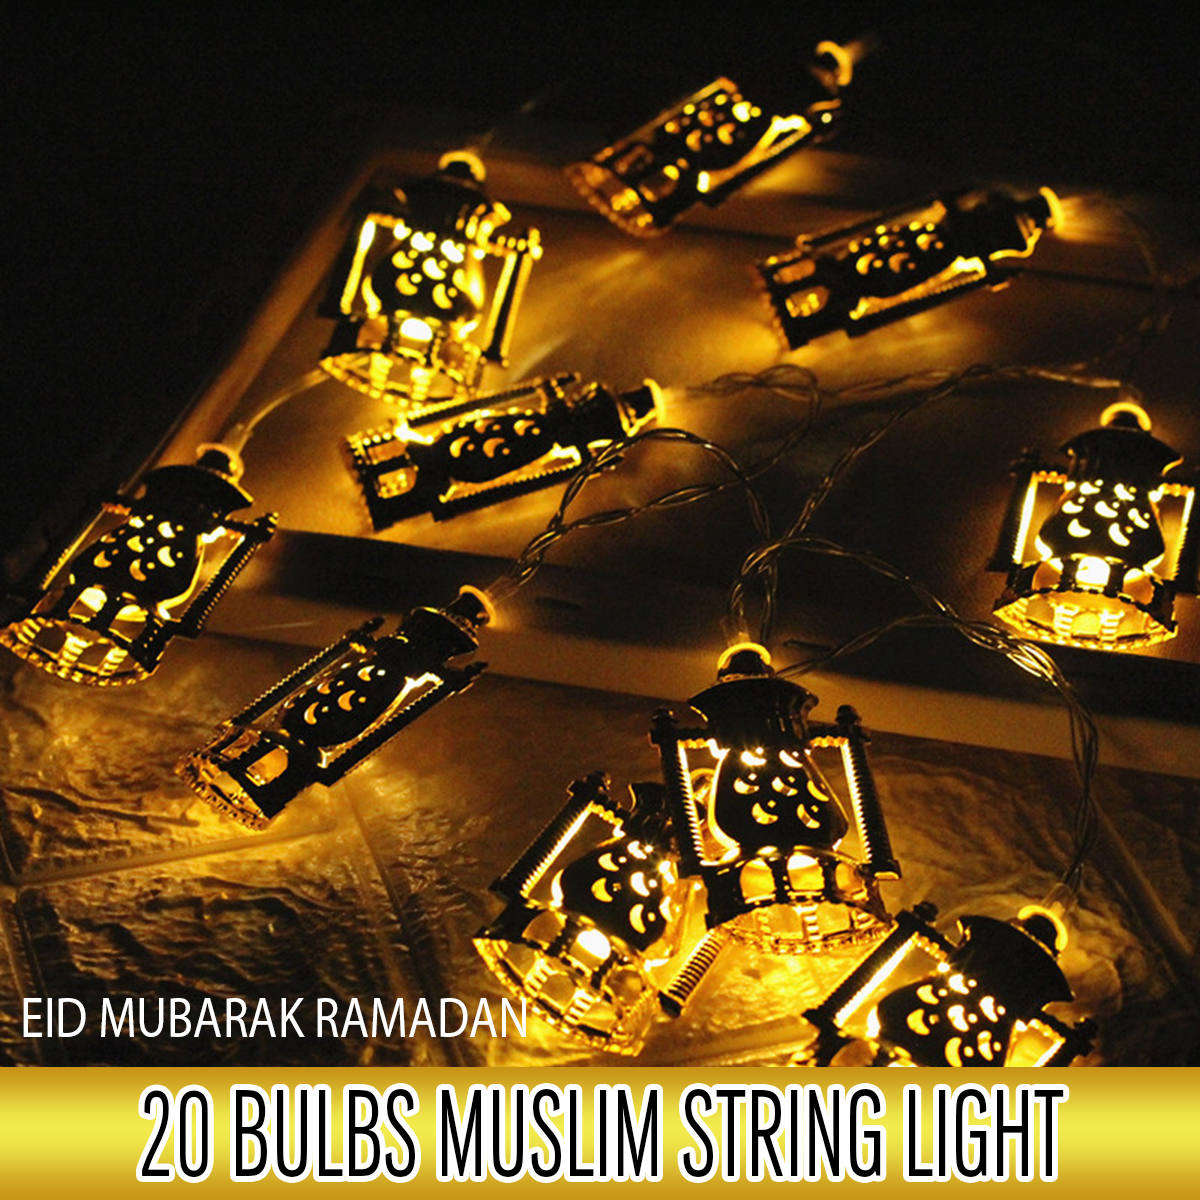 Eid-Mubarak-Ramadan-LED-Lamp-Strings-Golden-Castle-Moon-Lights-Decor-1670157-1